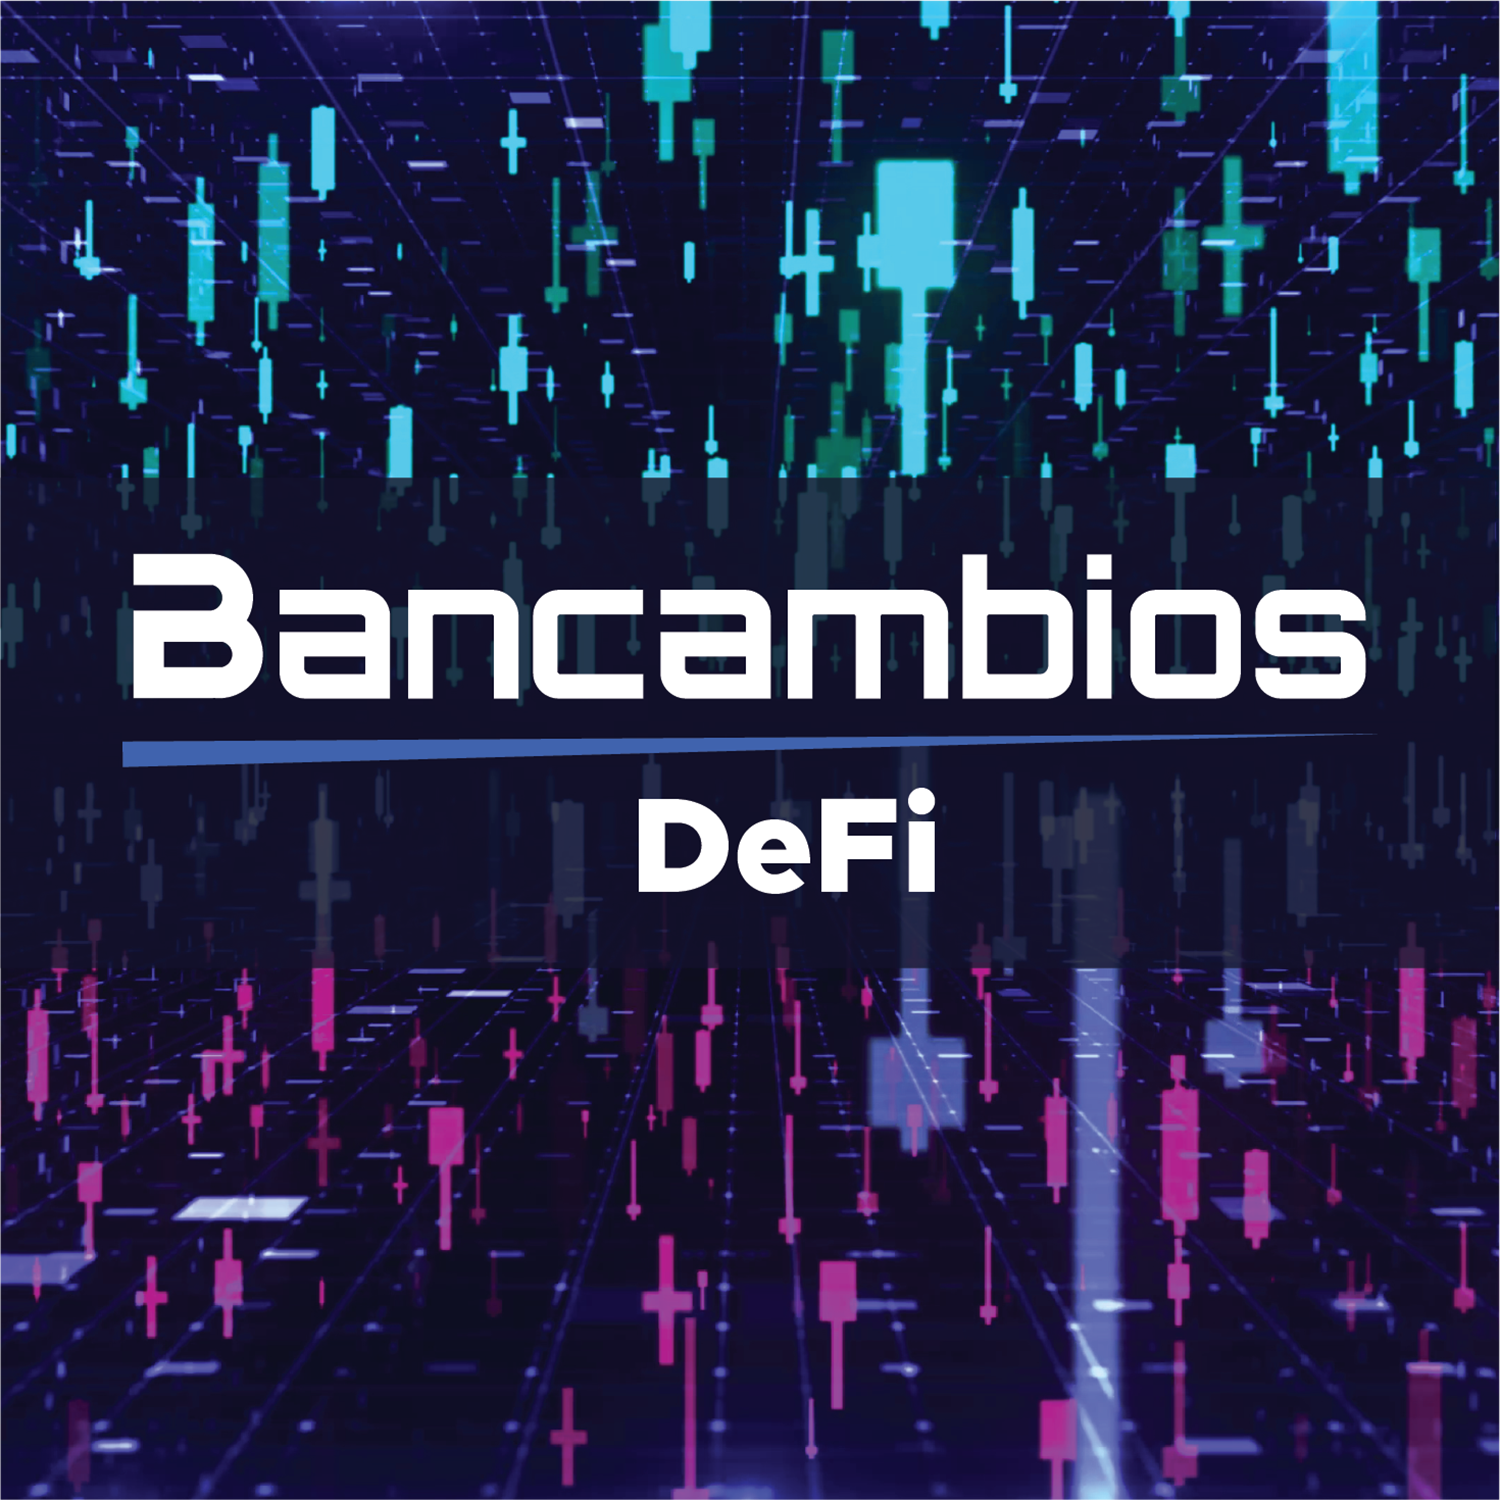 Bancambios chooses Solana Blockchain to build its Impact-driven DeFi platform